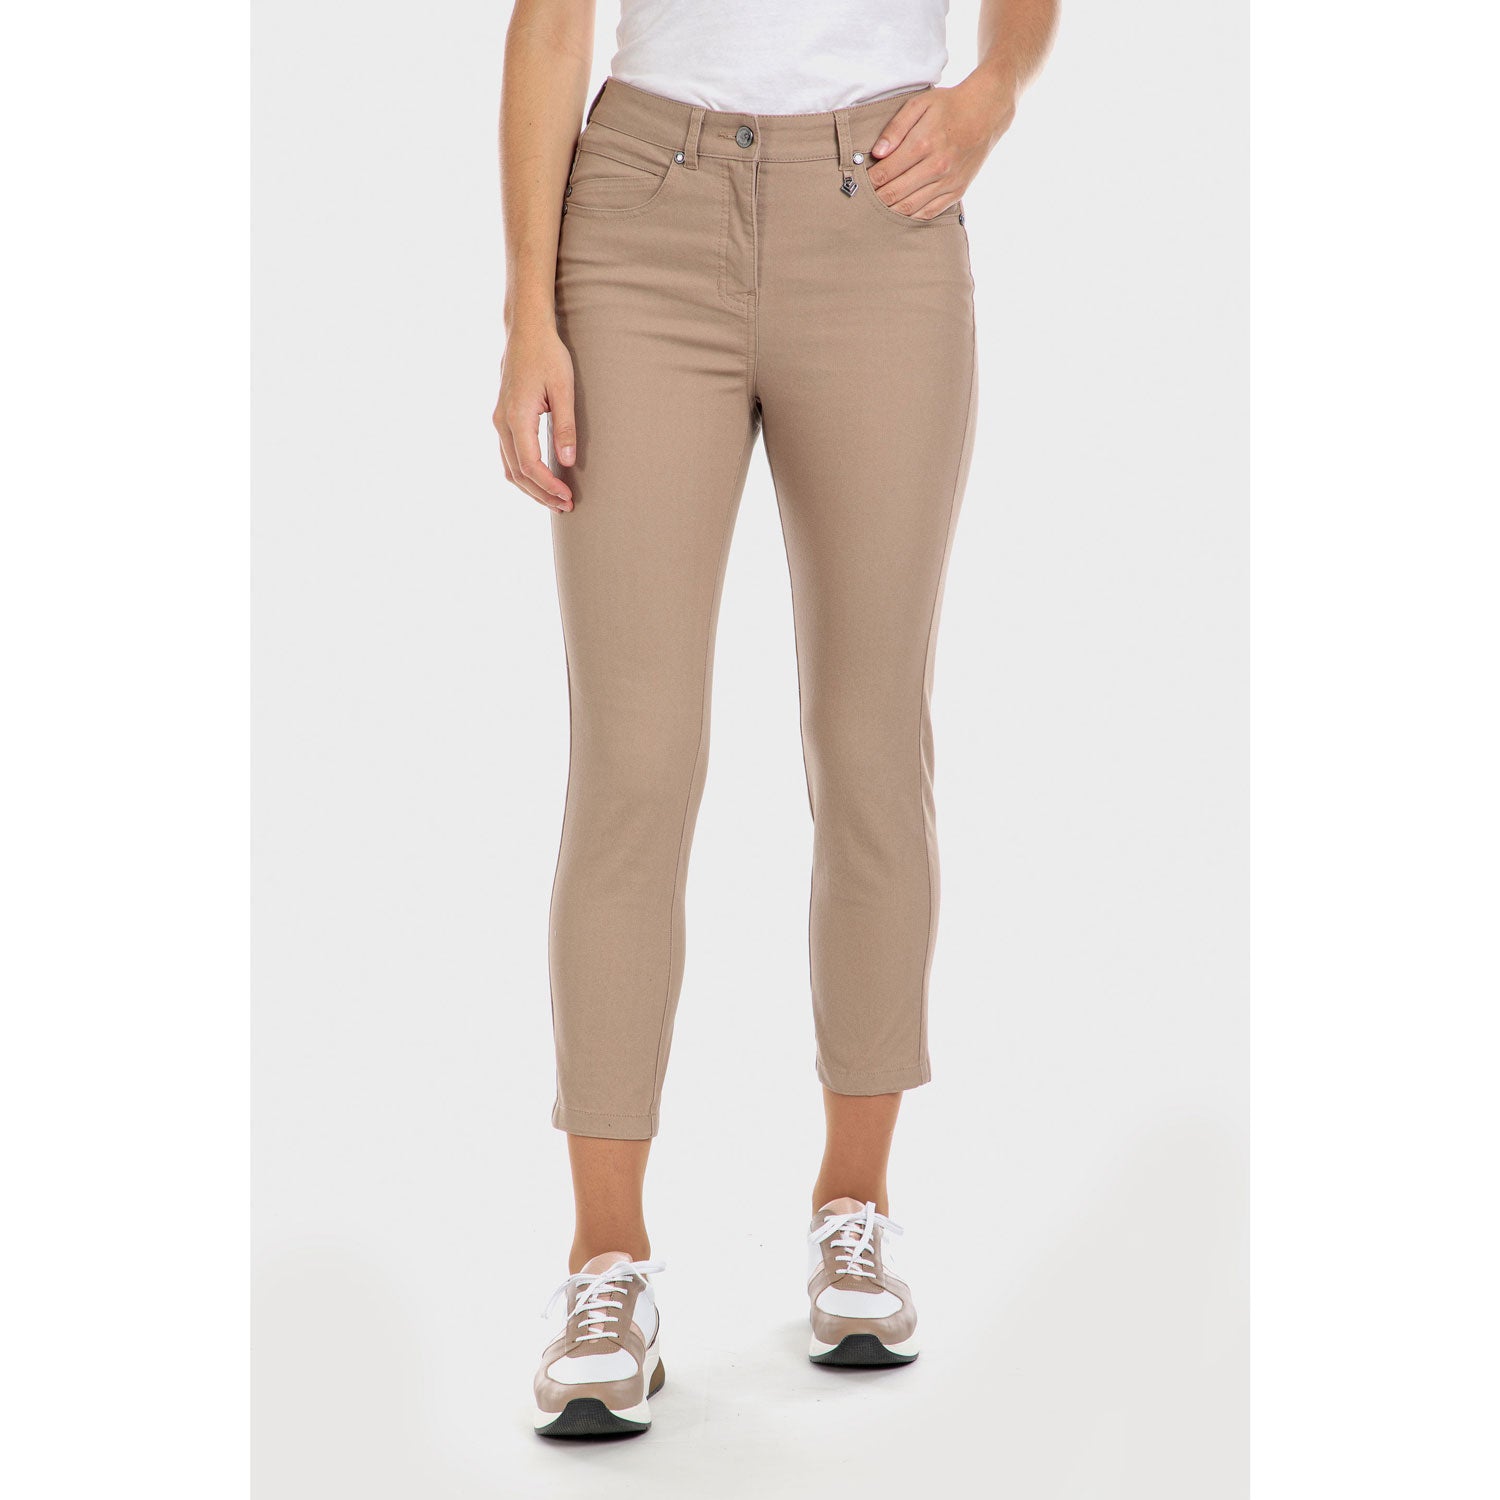 Punt Roma Cotton Capri Trousers - Brown Mink 1 Shaws Department Stores